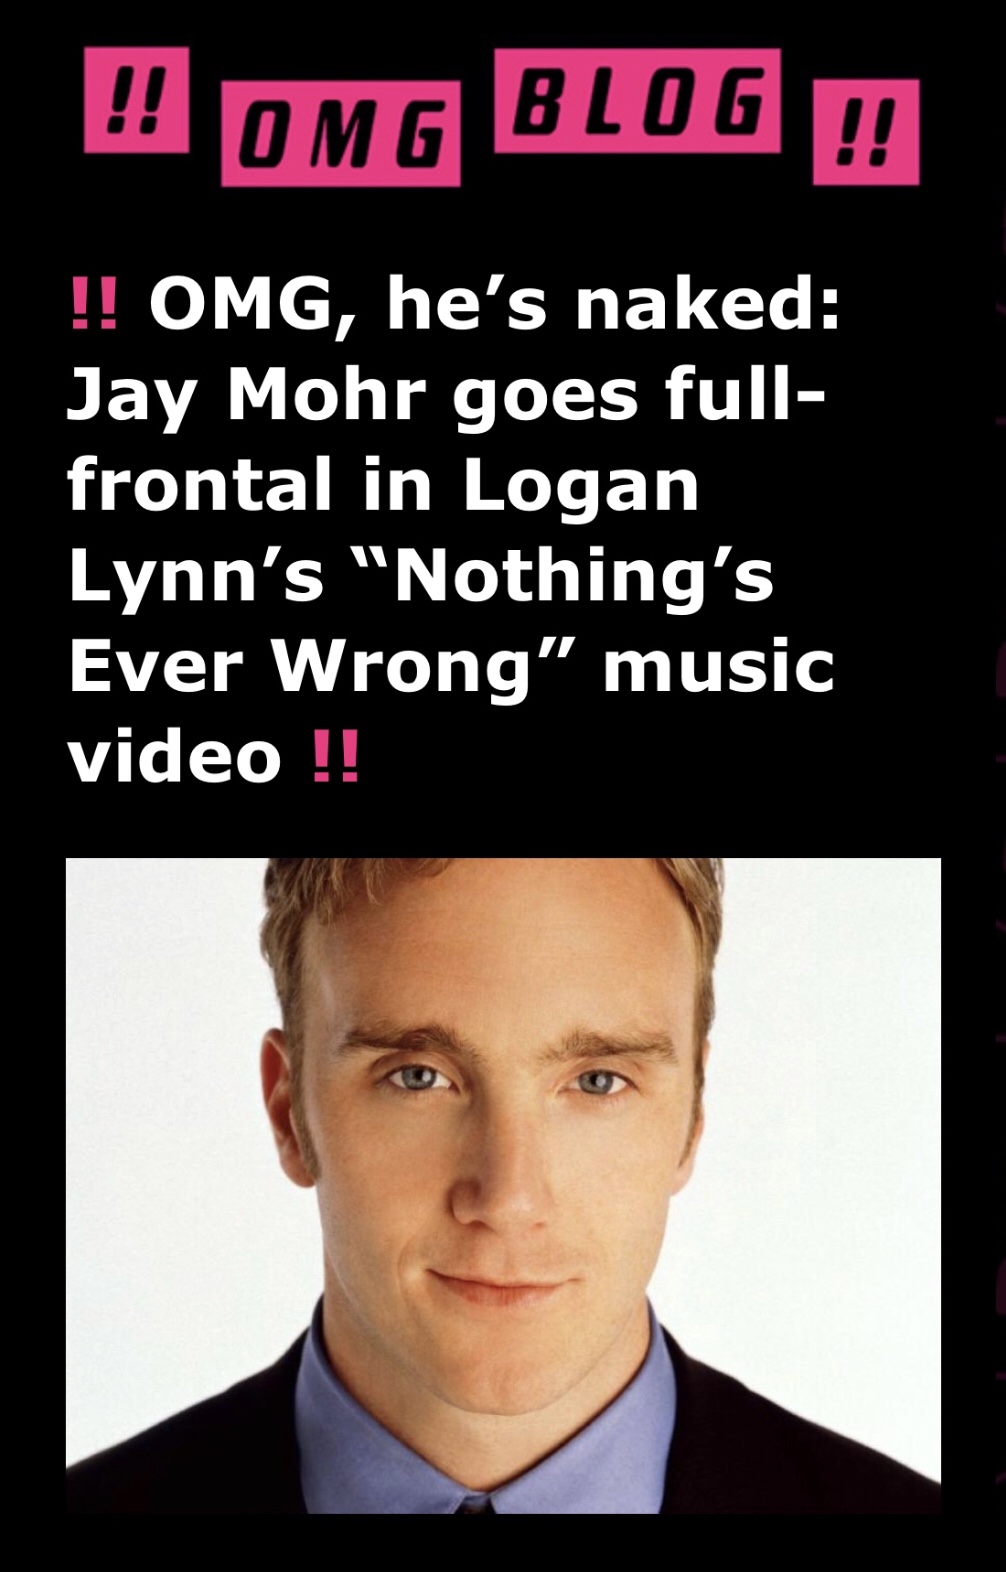 OMG, hes naked: Jay Mohr goes full-frontal in Logan Lynn 